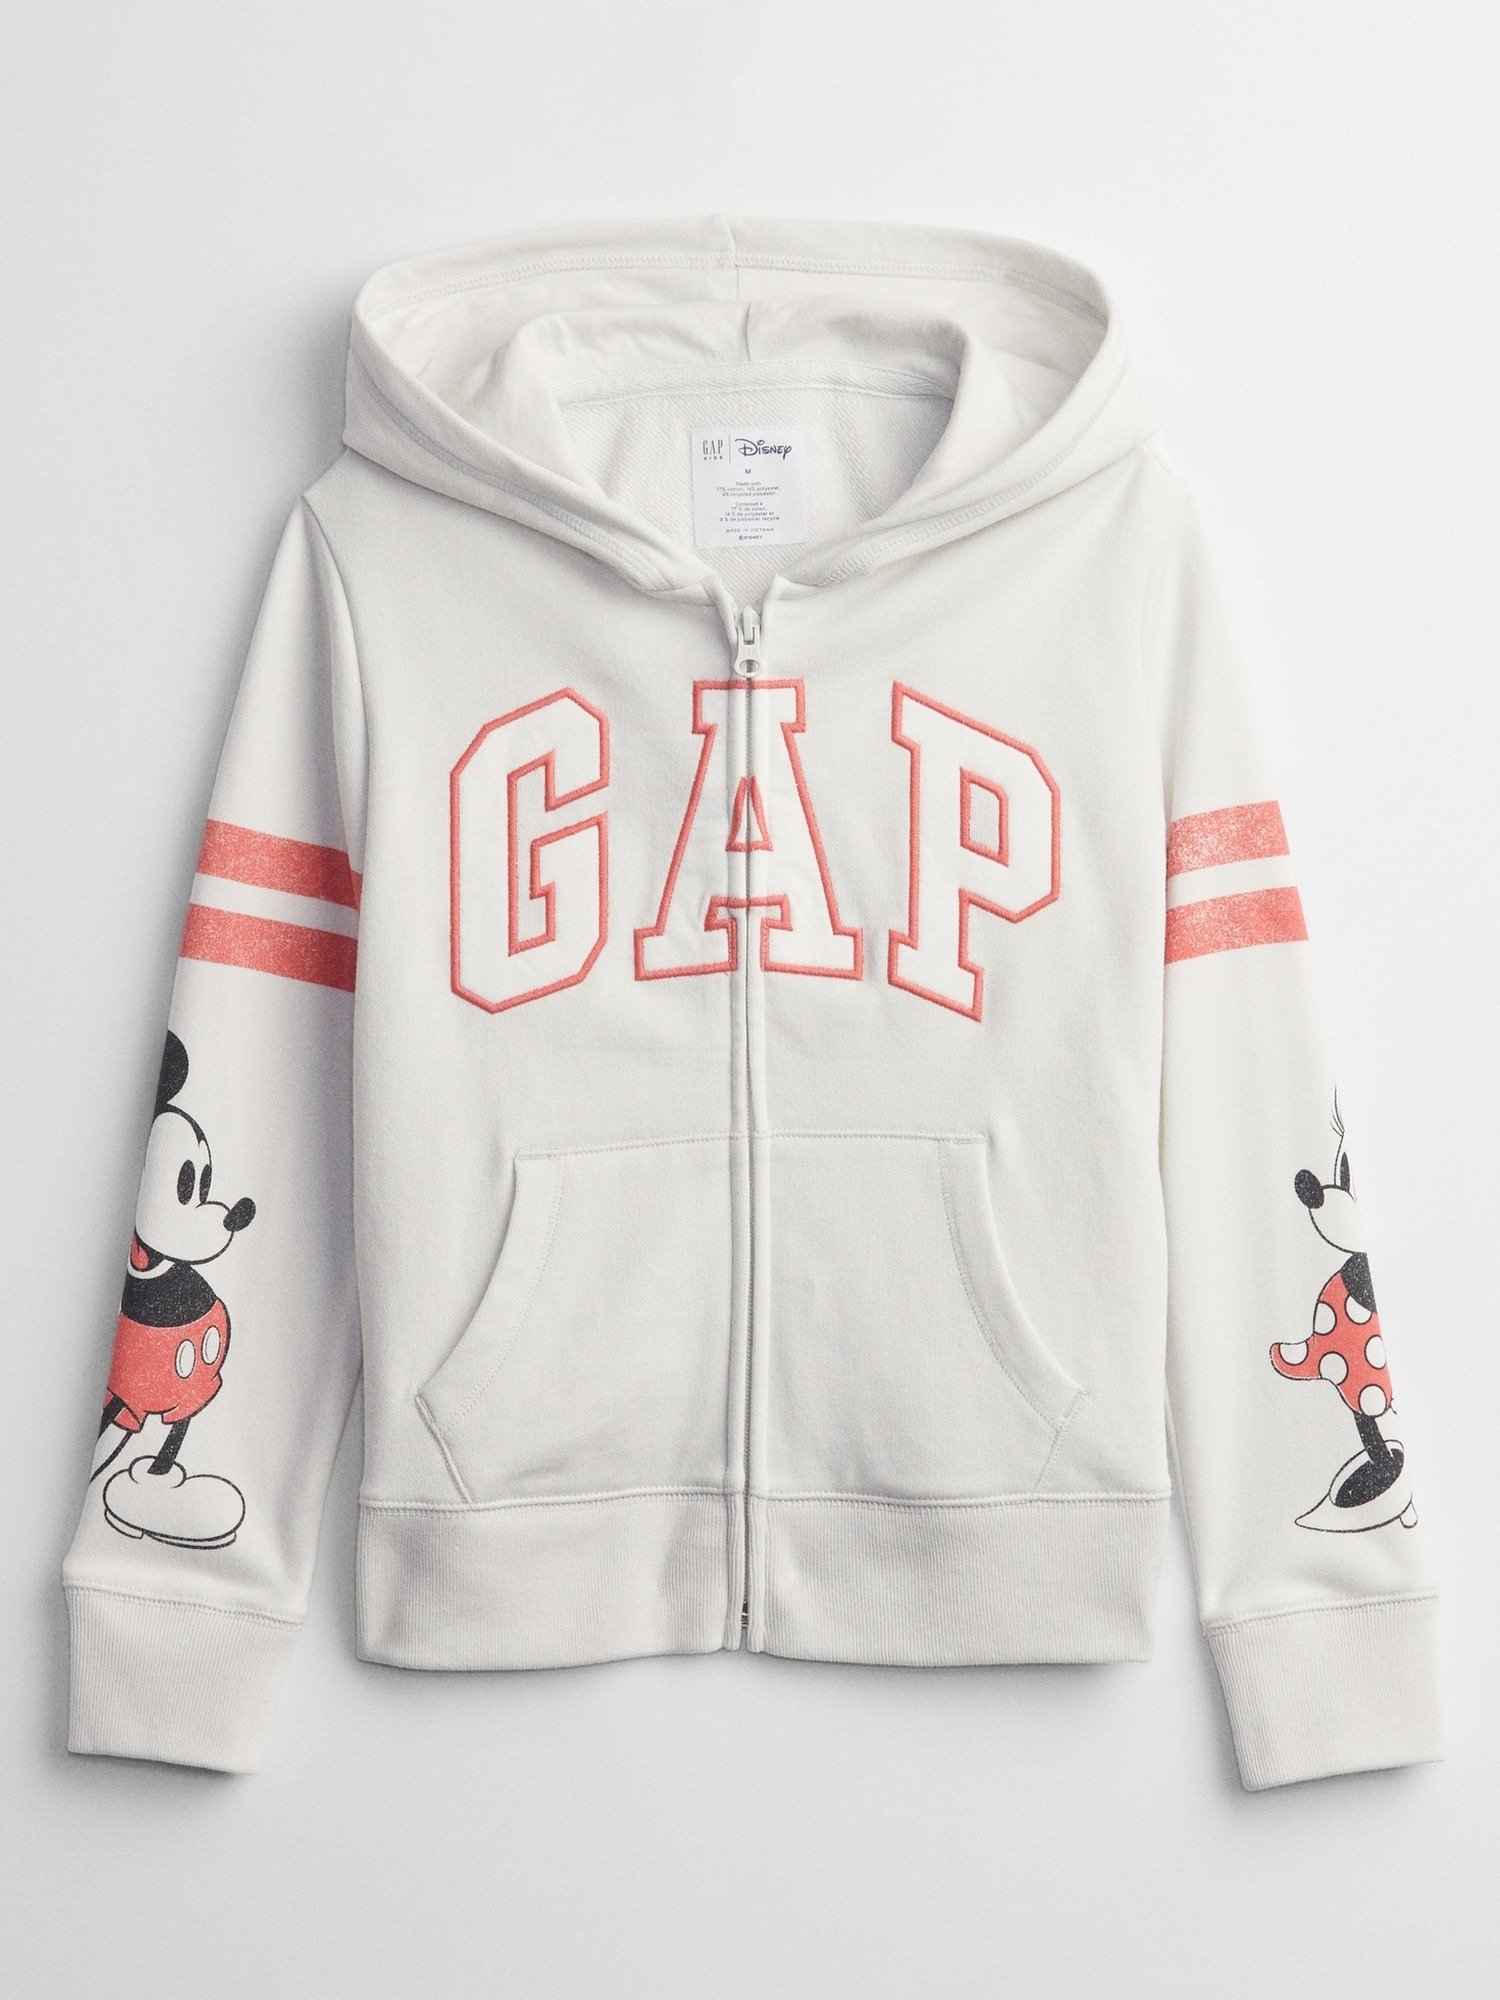 GAP X Disney Logo Sweatshirt product image